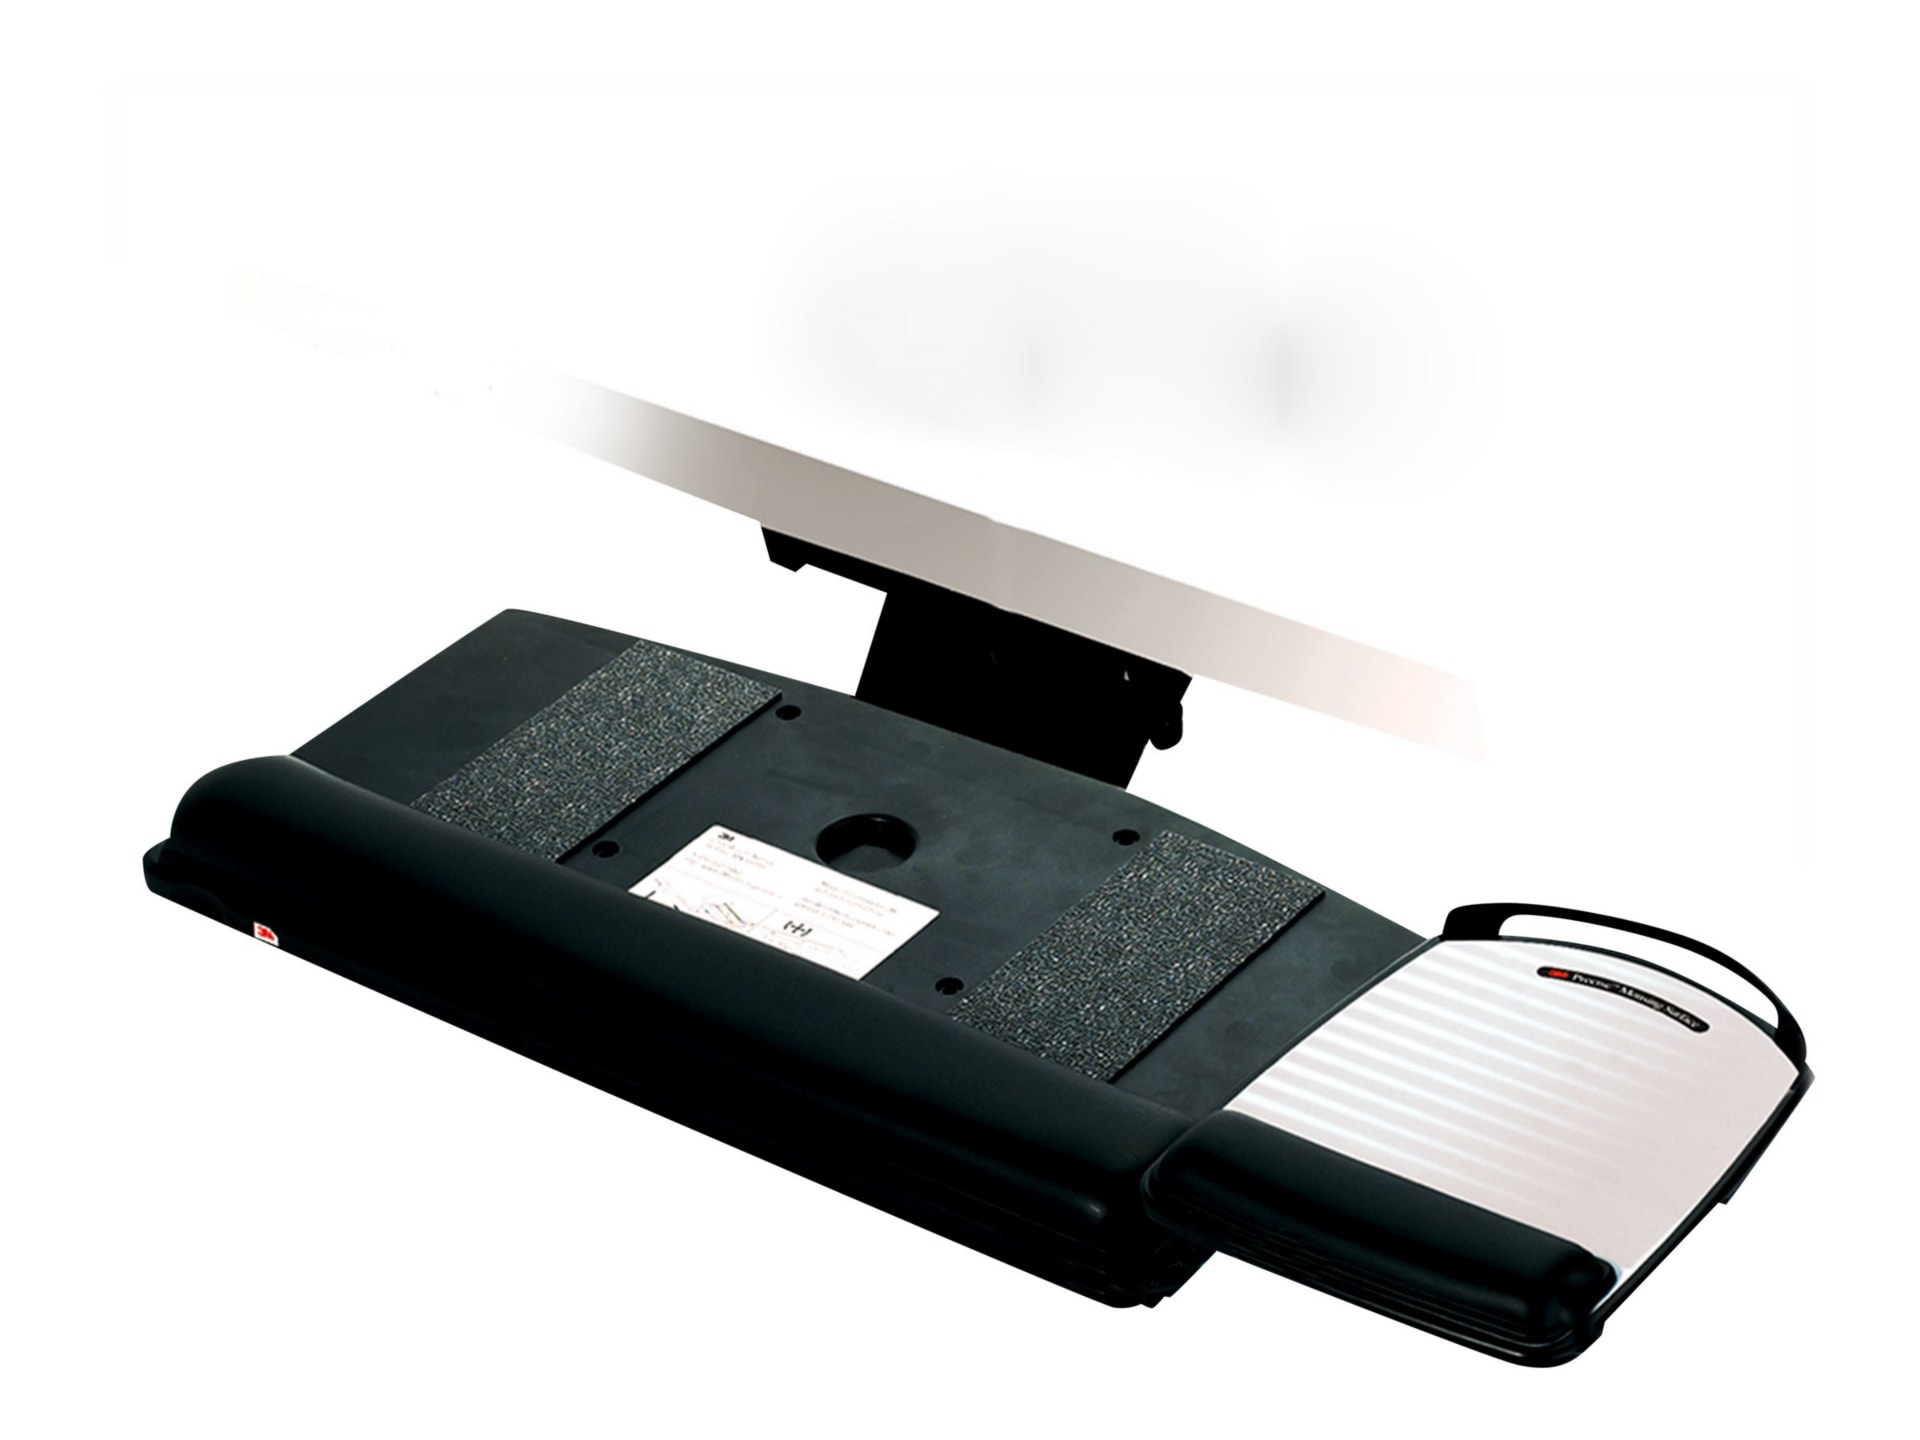 3M Easy Adjust Keyboard Tray AKT150LE - keyboard/mouse shelf